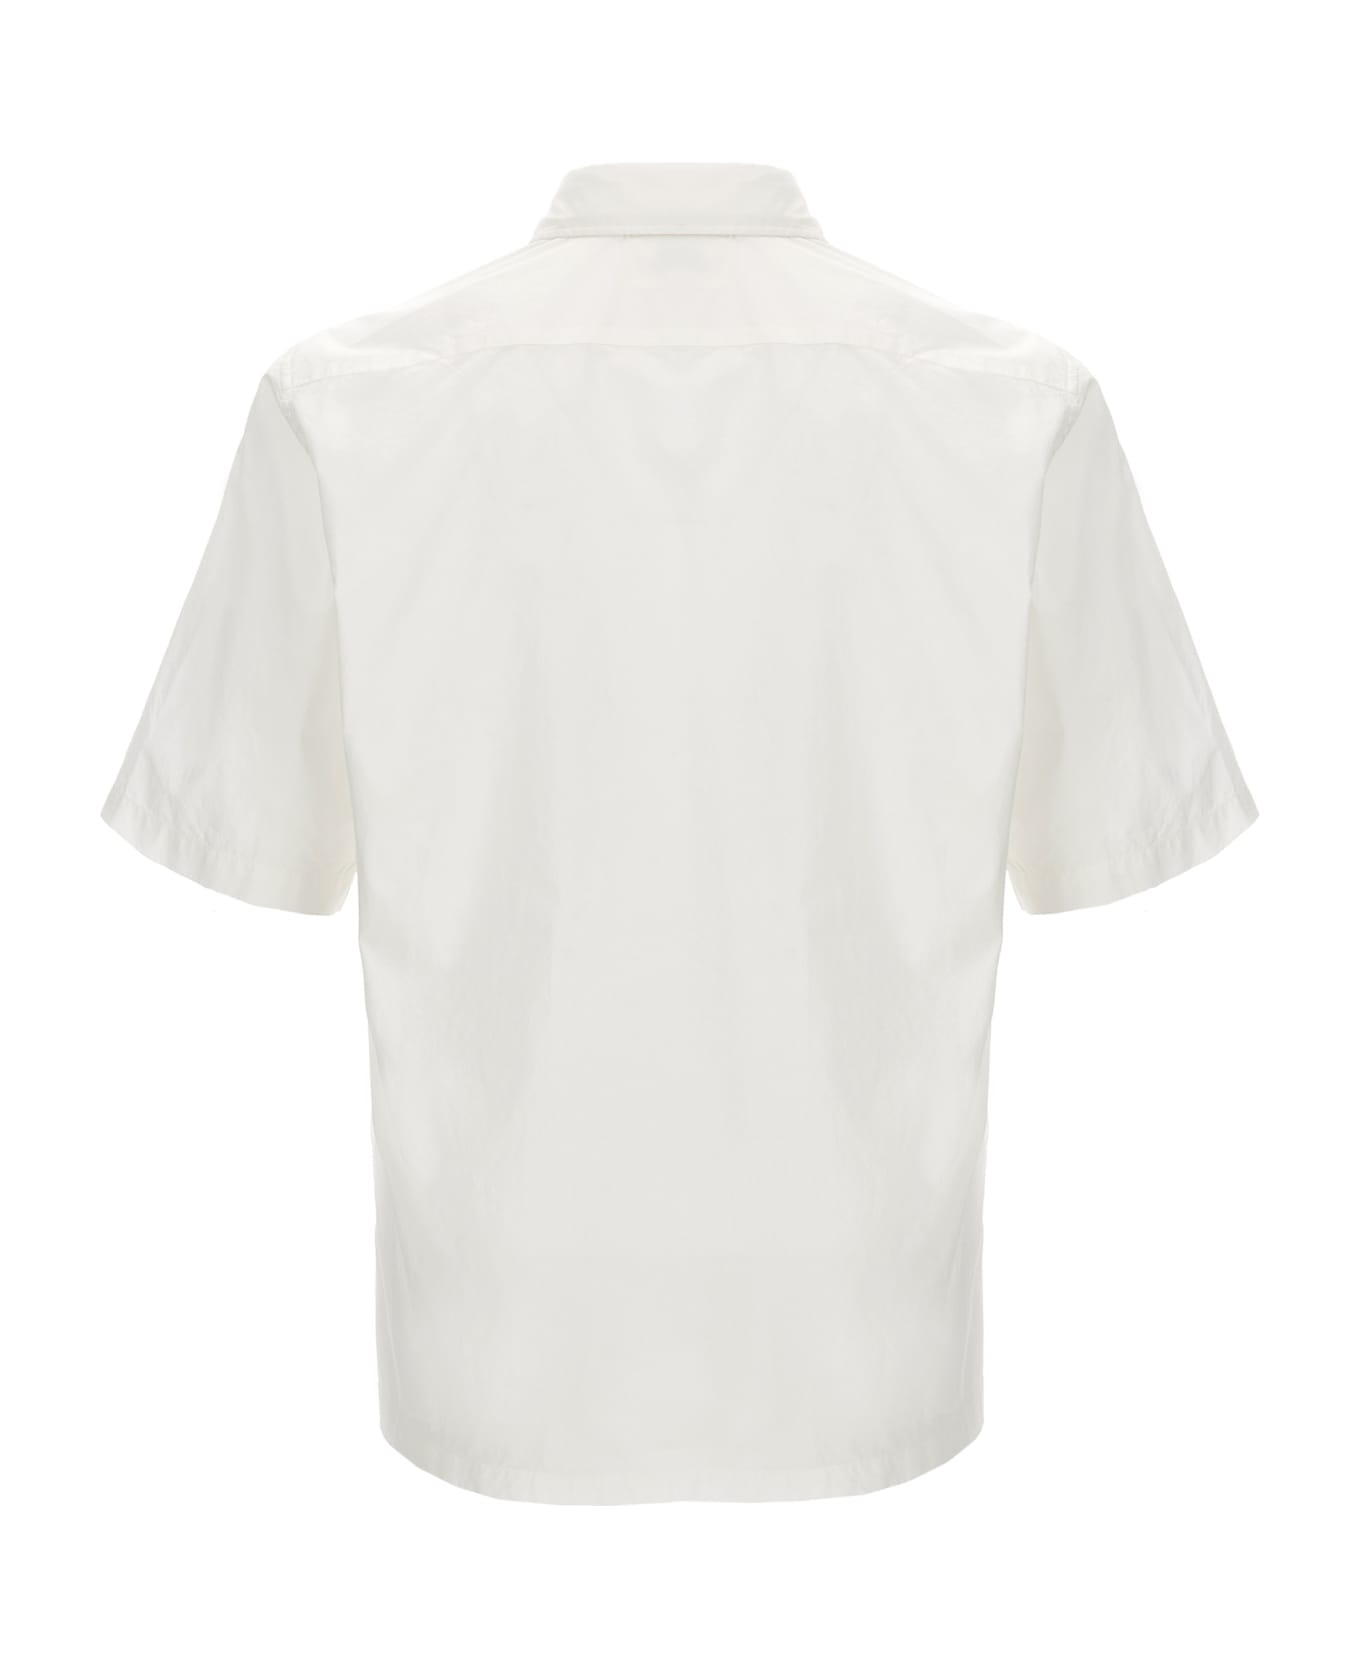 C.P. Company Logo Embroidery Shirt - Bianco シャツ